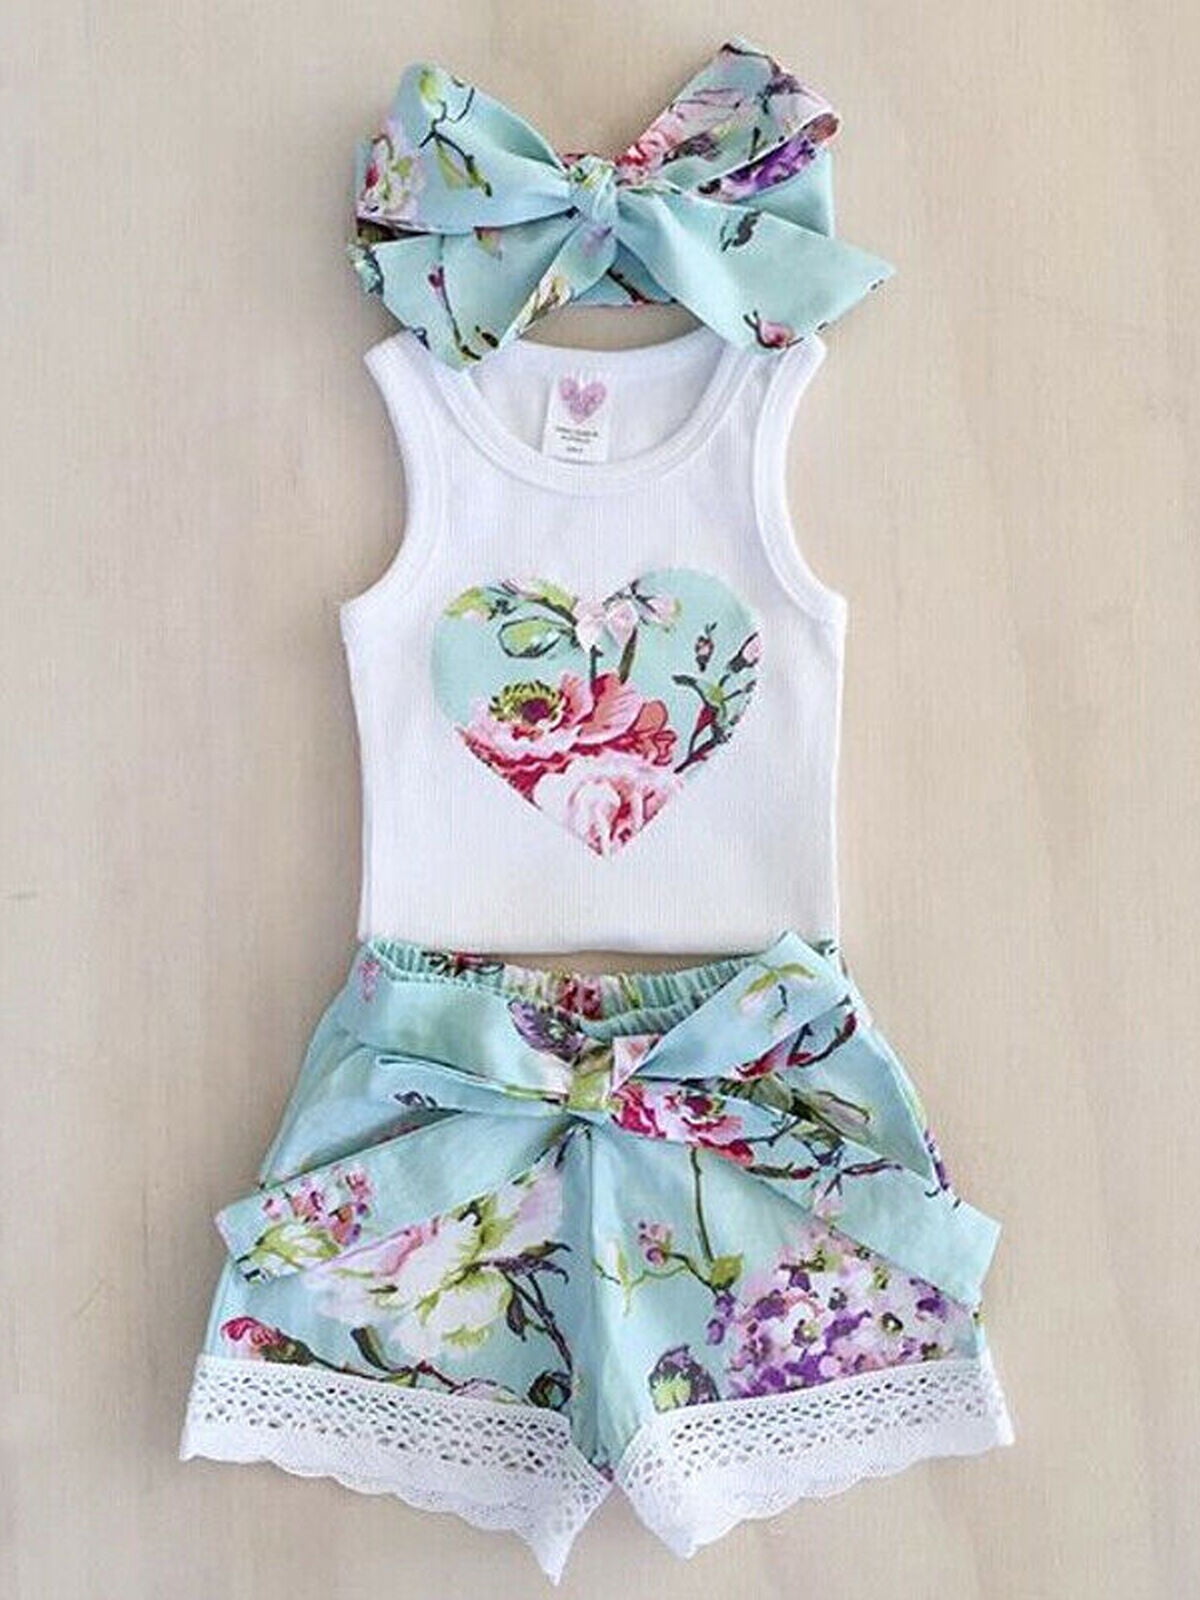 Details about   Toddler Kids Baby Girls T-shirt Vest Tops+Pants Shorts Clothes Outfits 3PCS Set 